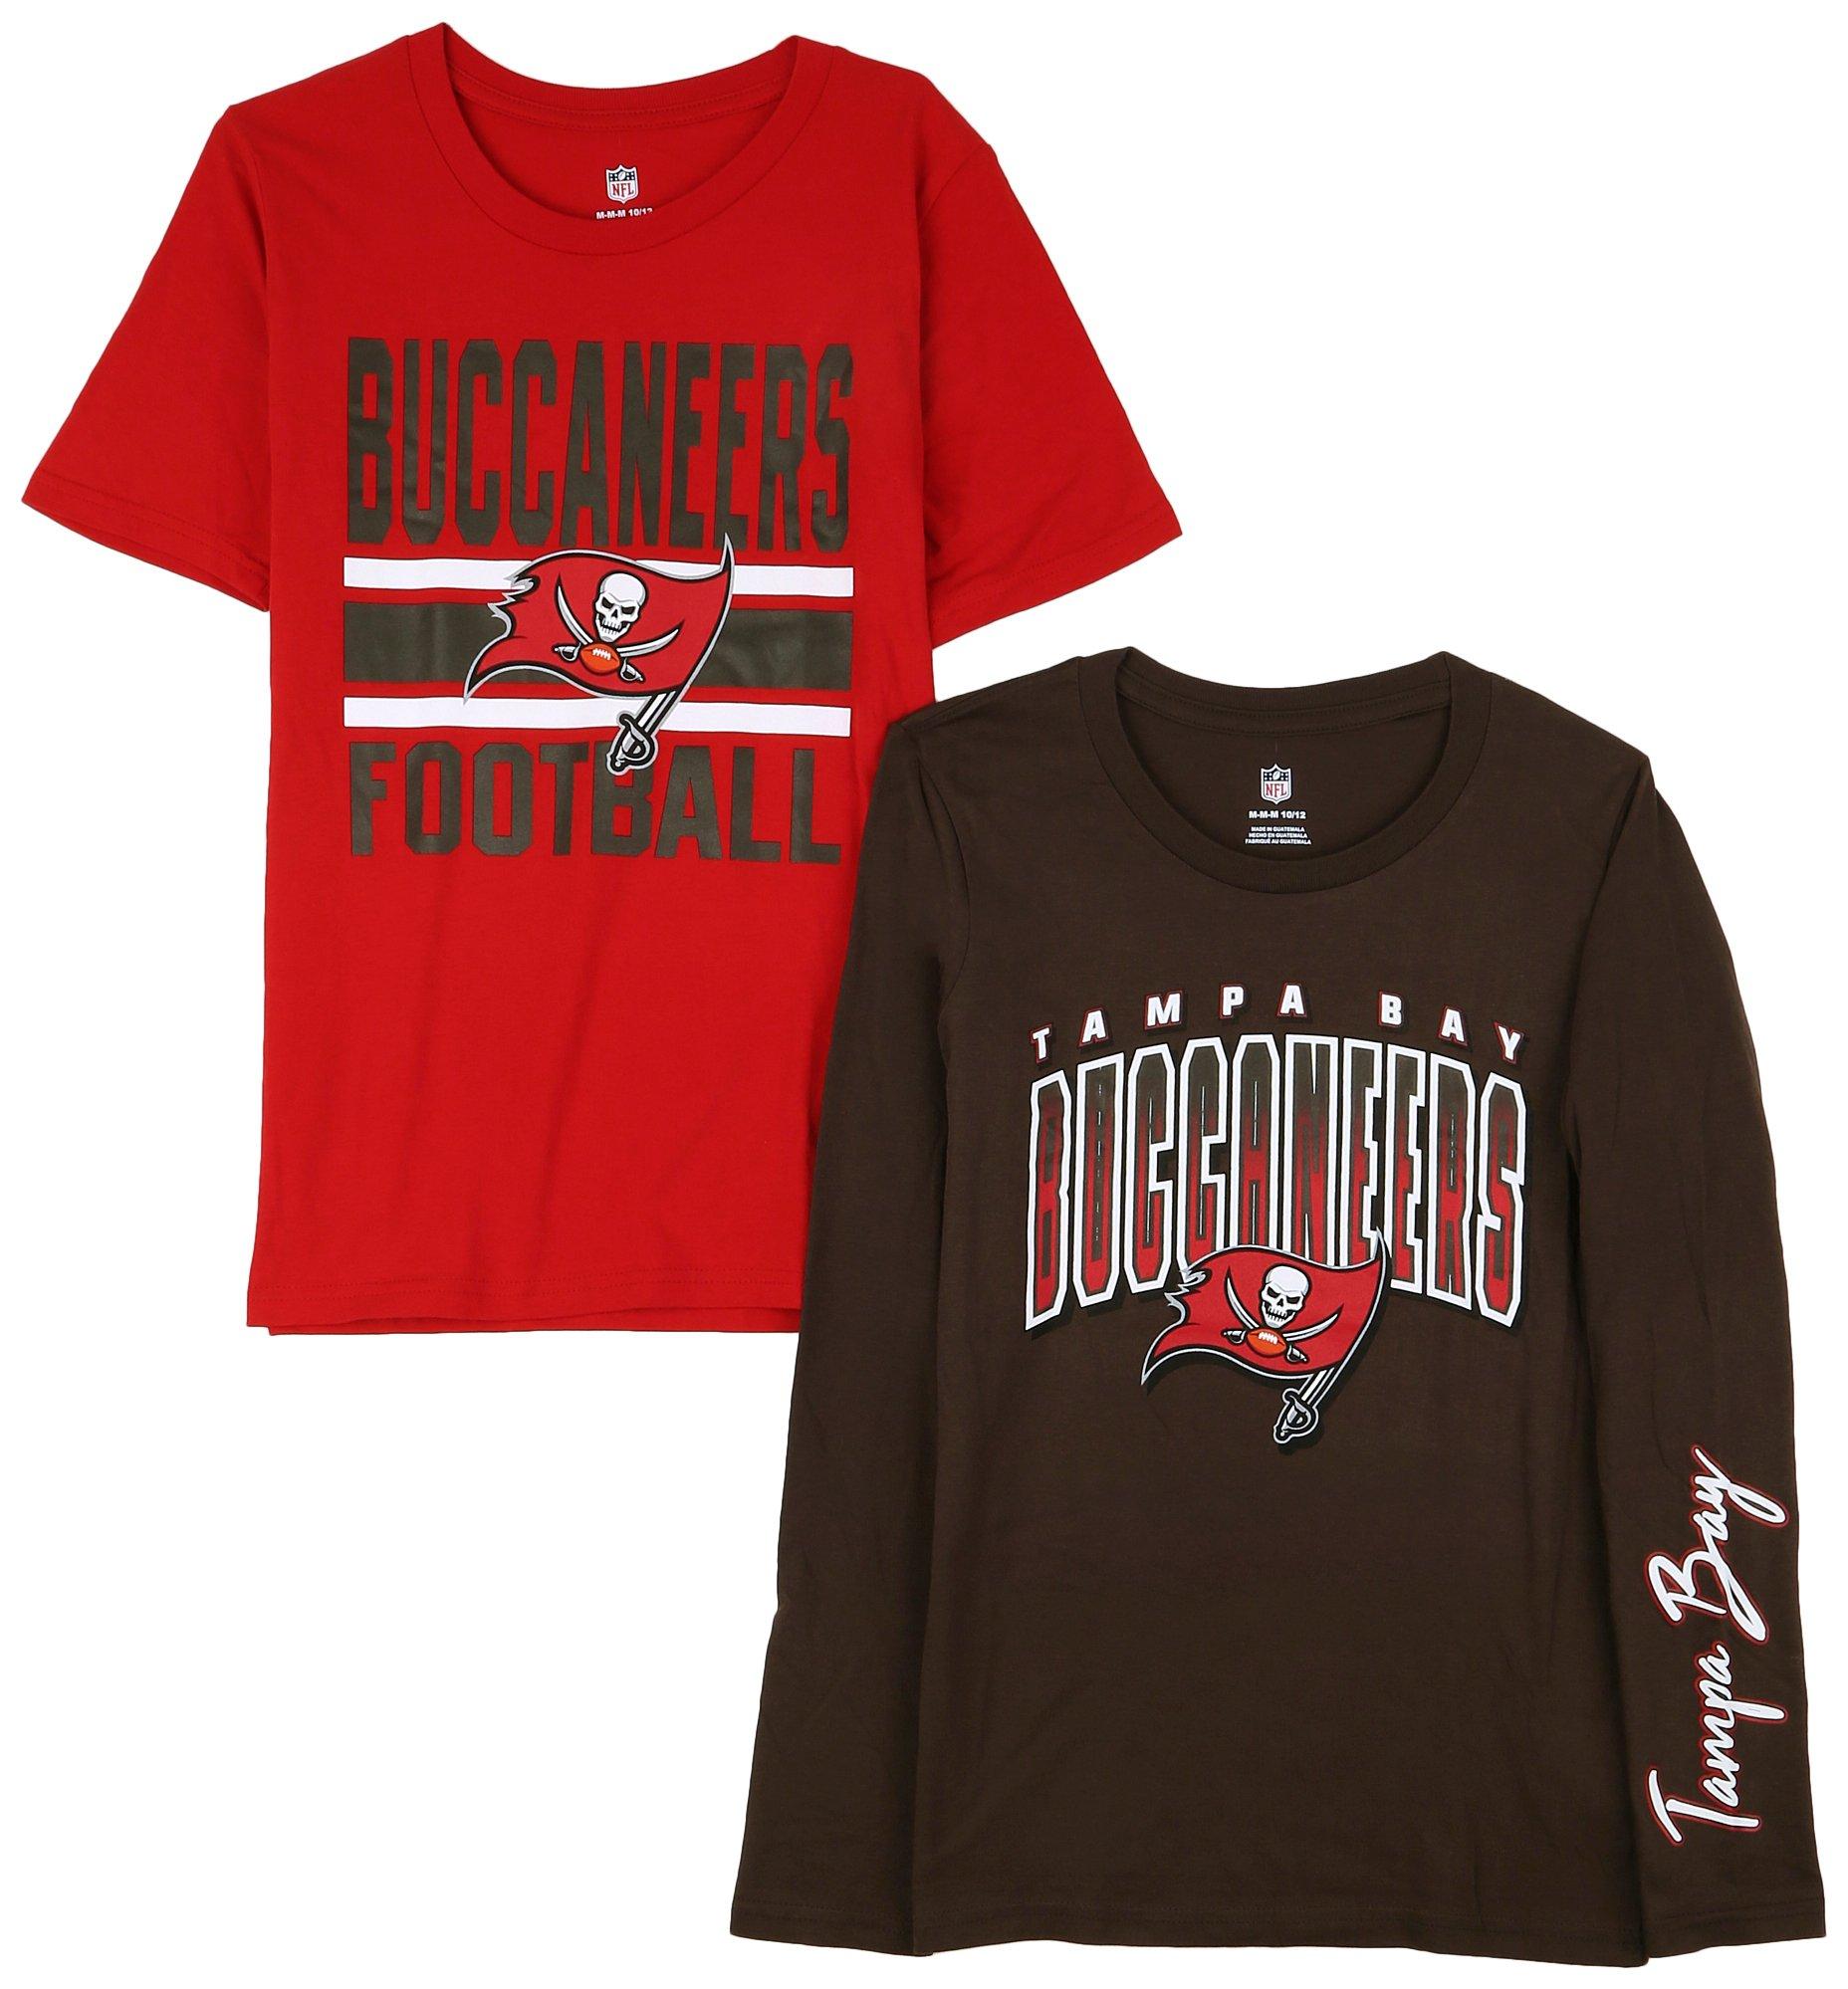 Tampa Bay Buccaneers Kids 2-piece Shirt Set